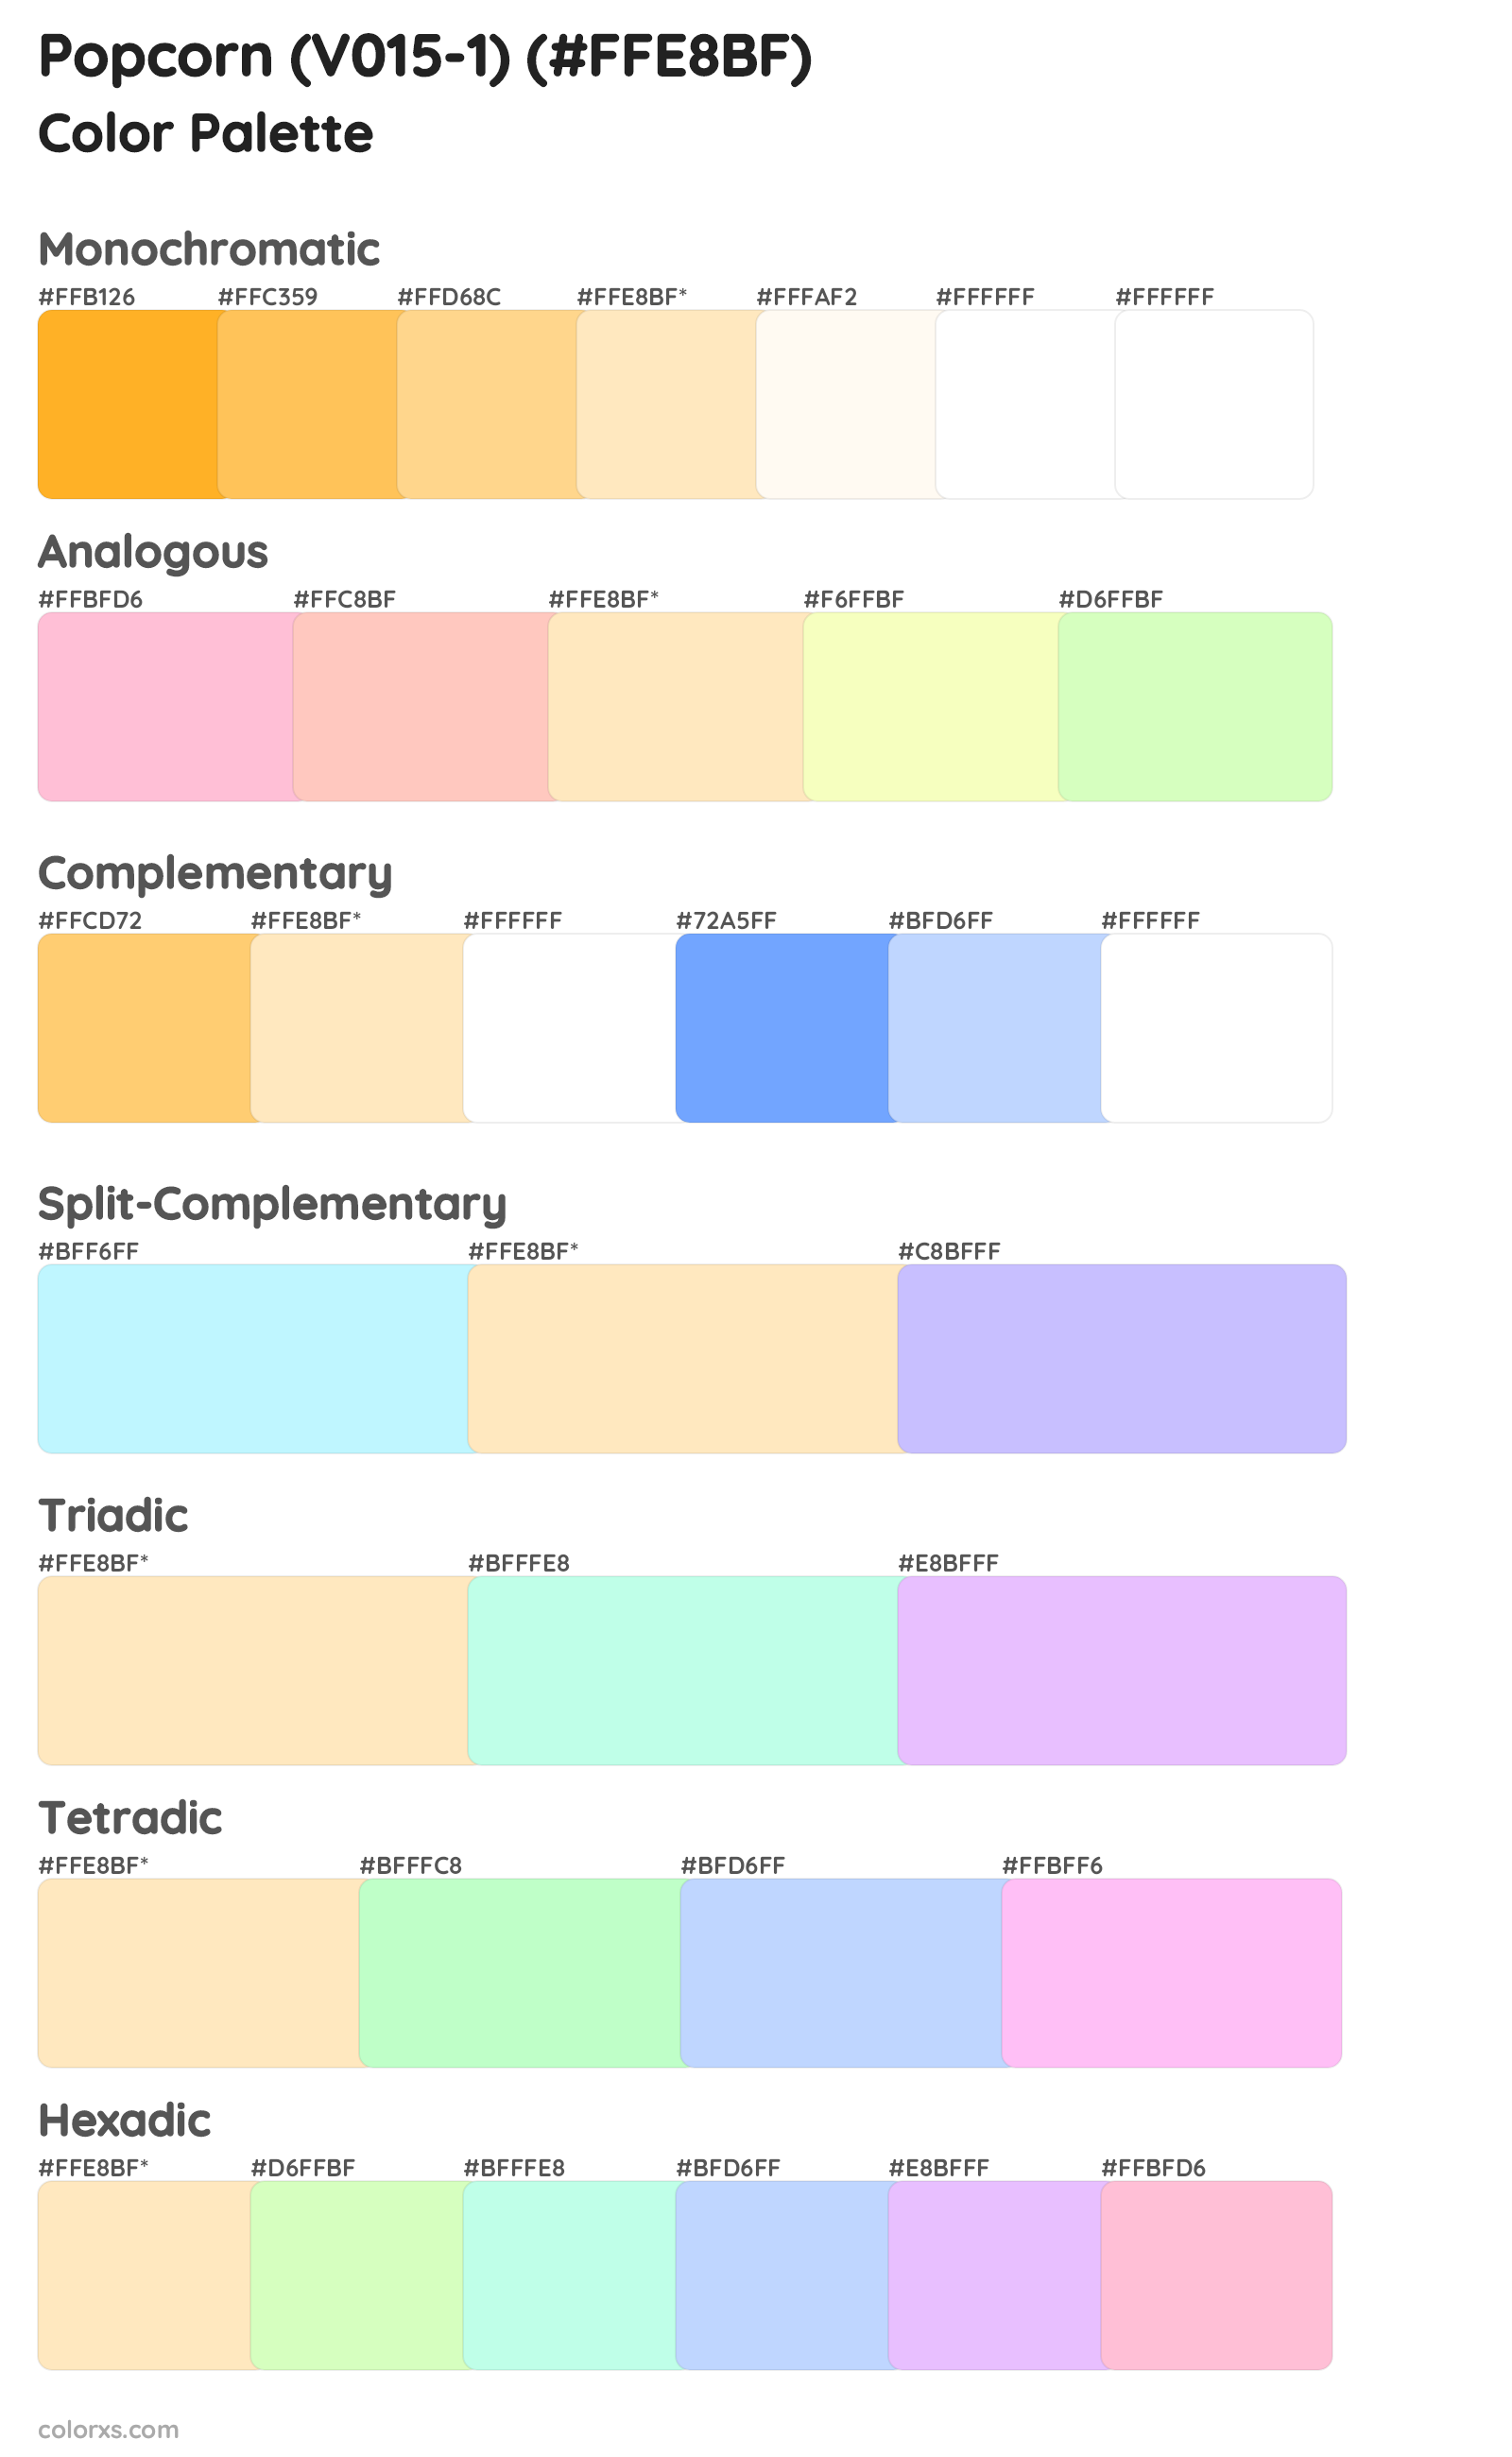 Popcorn (V015-1) Color Scheme Palettes